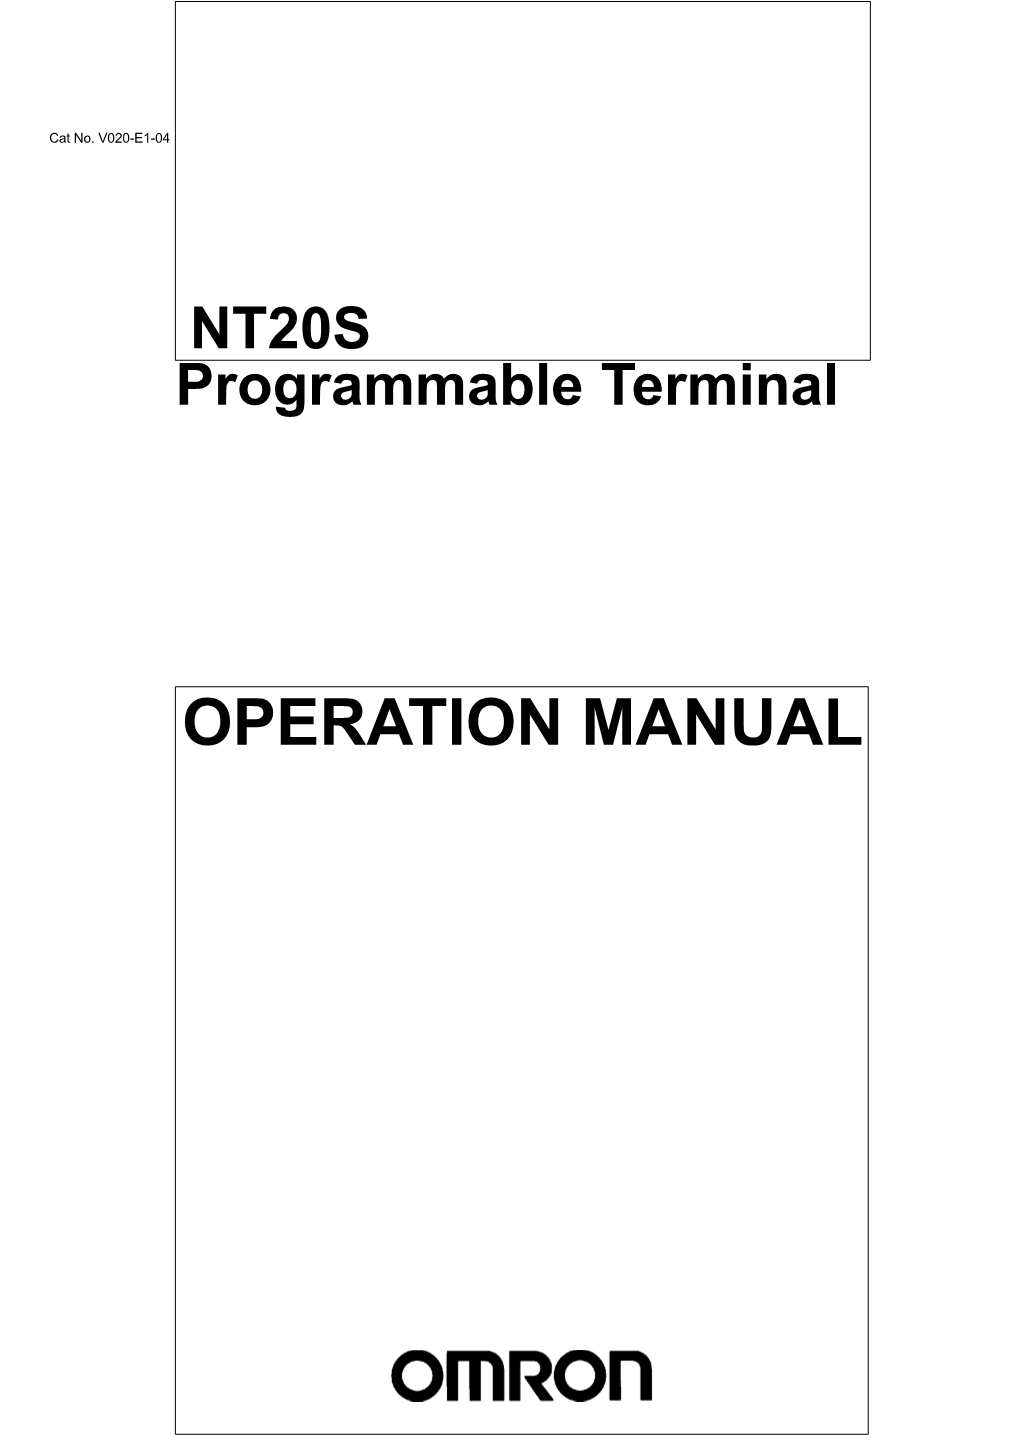 OPERATION MANUAL I Ii NT-Series Programmable Terminal Operation Manual